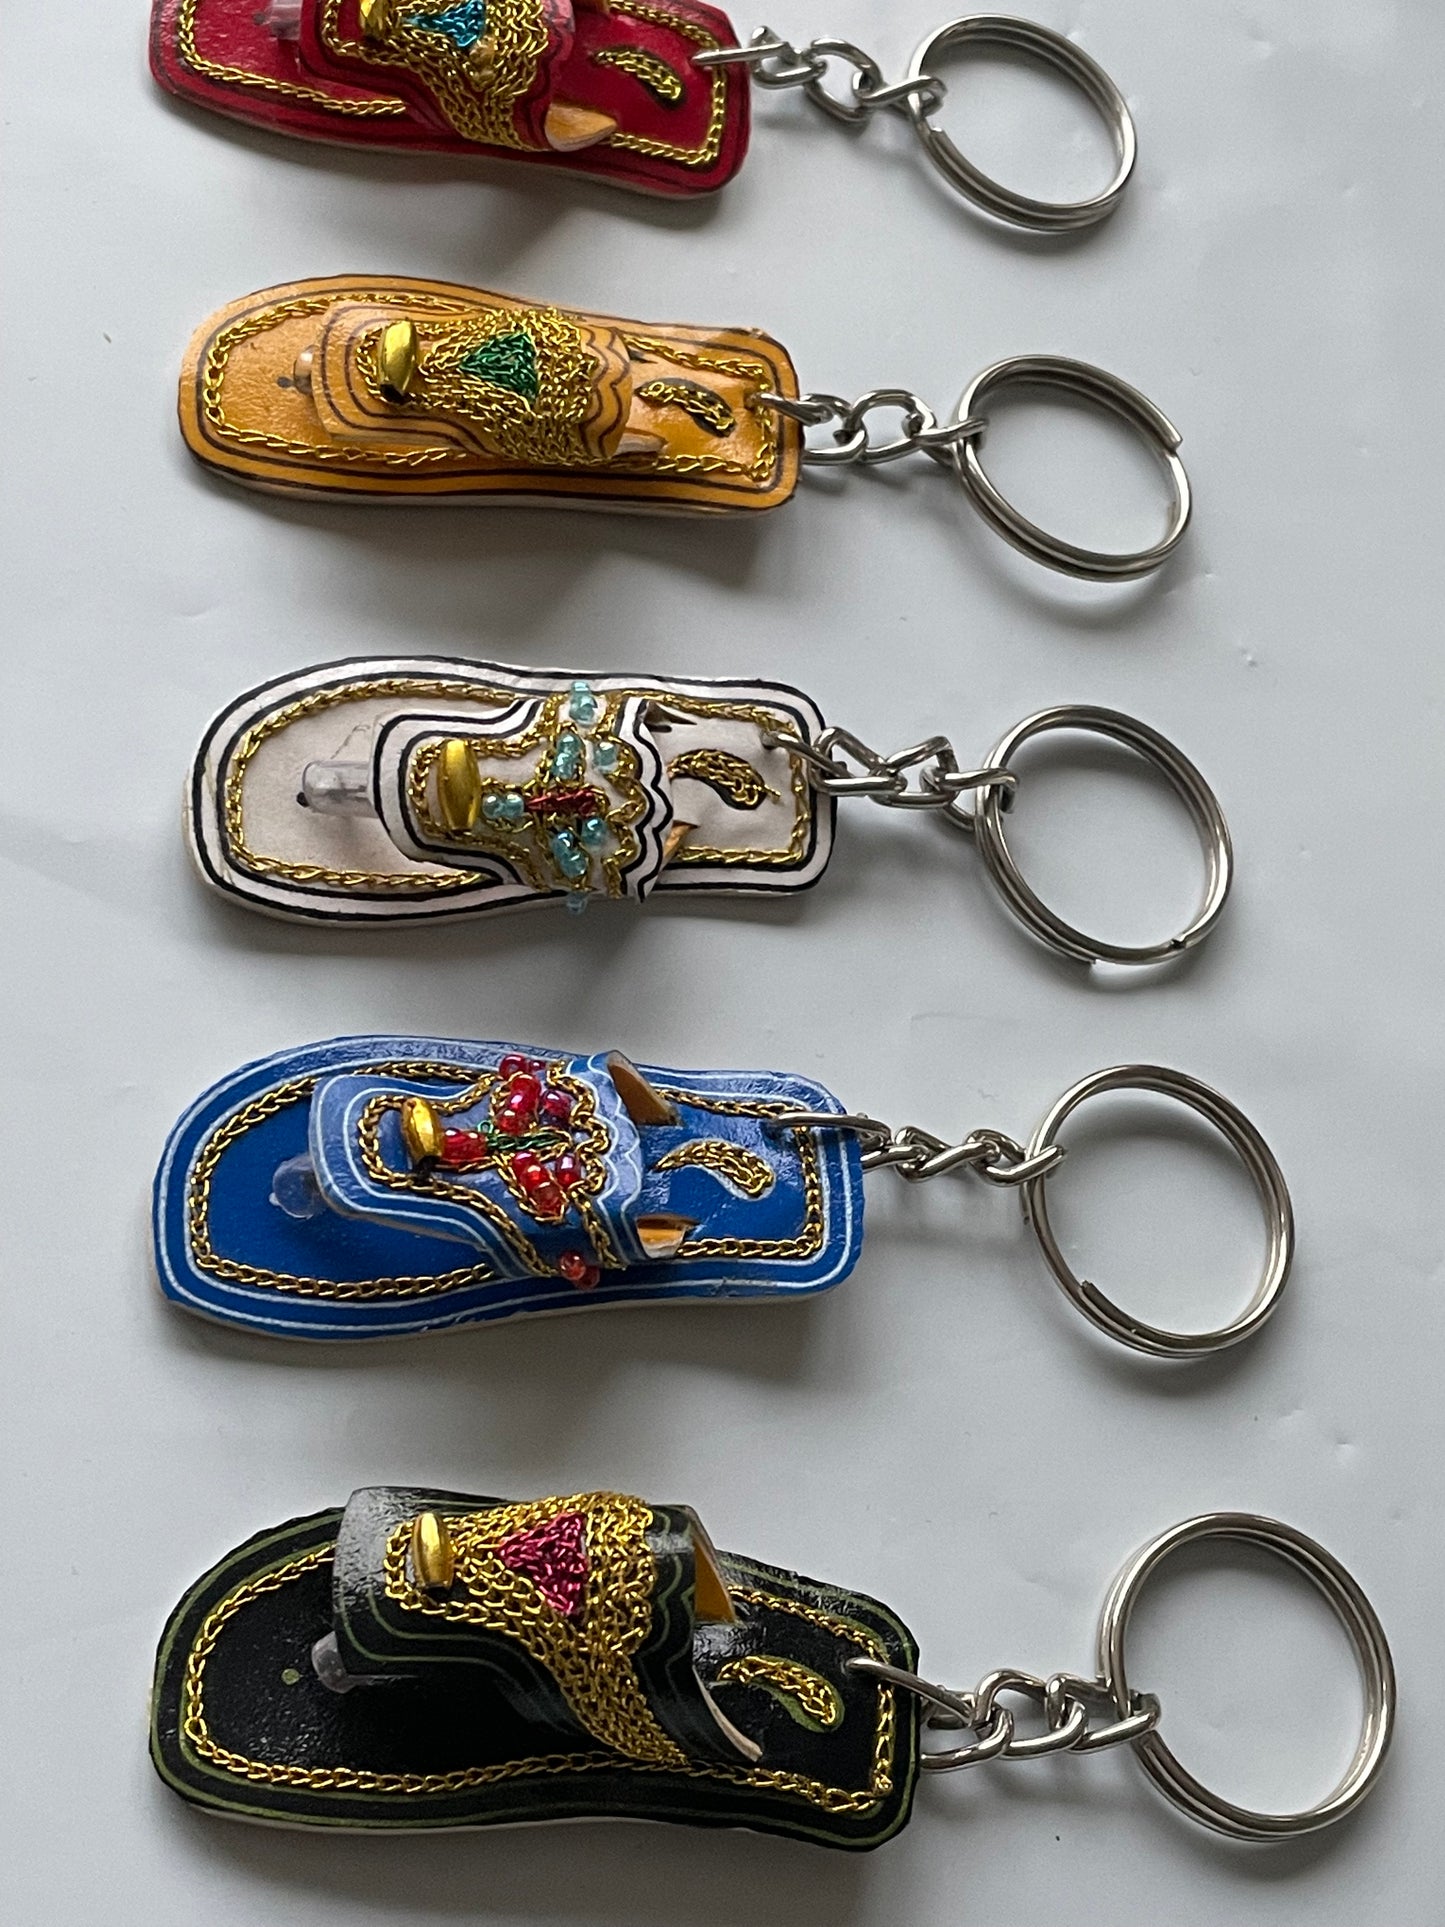 Keychain Car Key ring Multani khussa design keychain